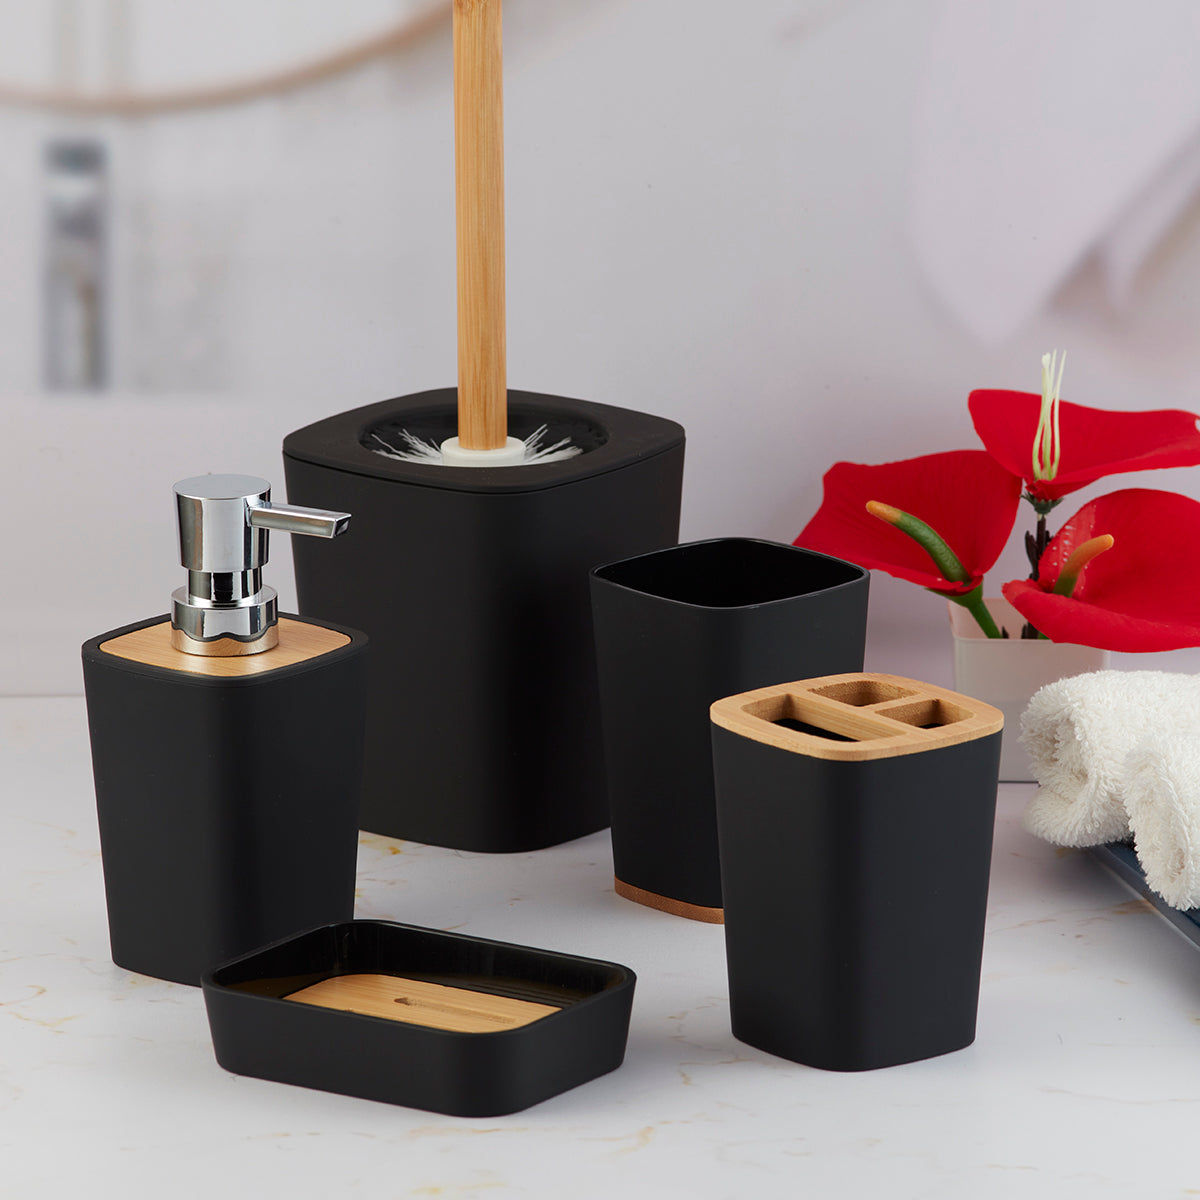 Acrylic Bathroom Accessories Set of 5 Bath Set with Soap Dispenser (10031)